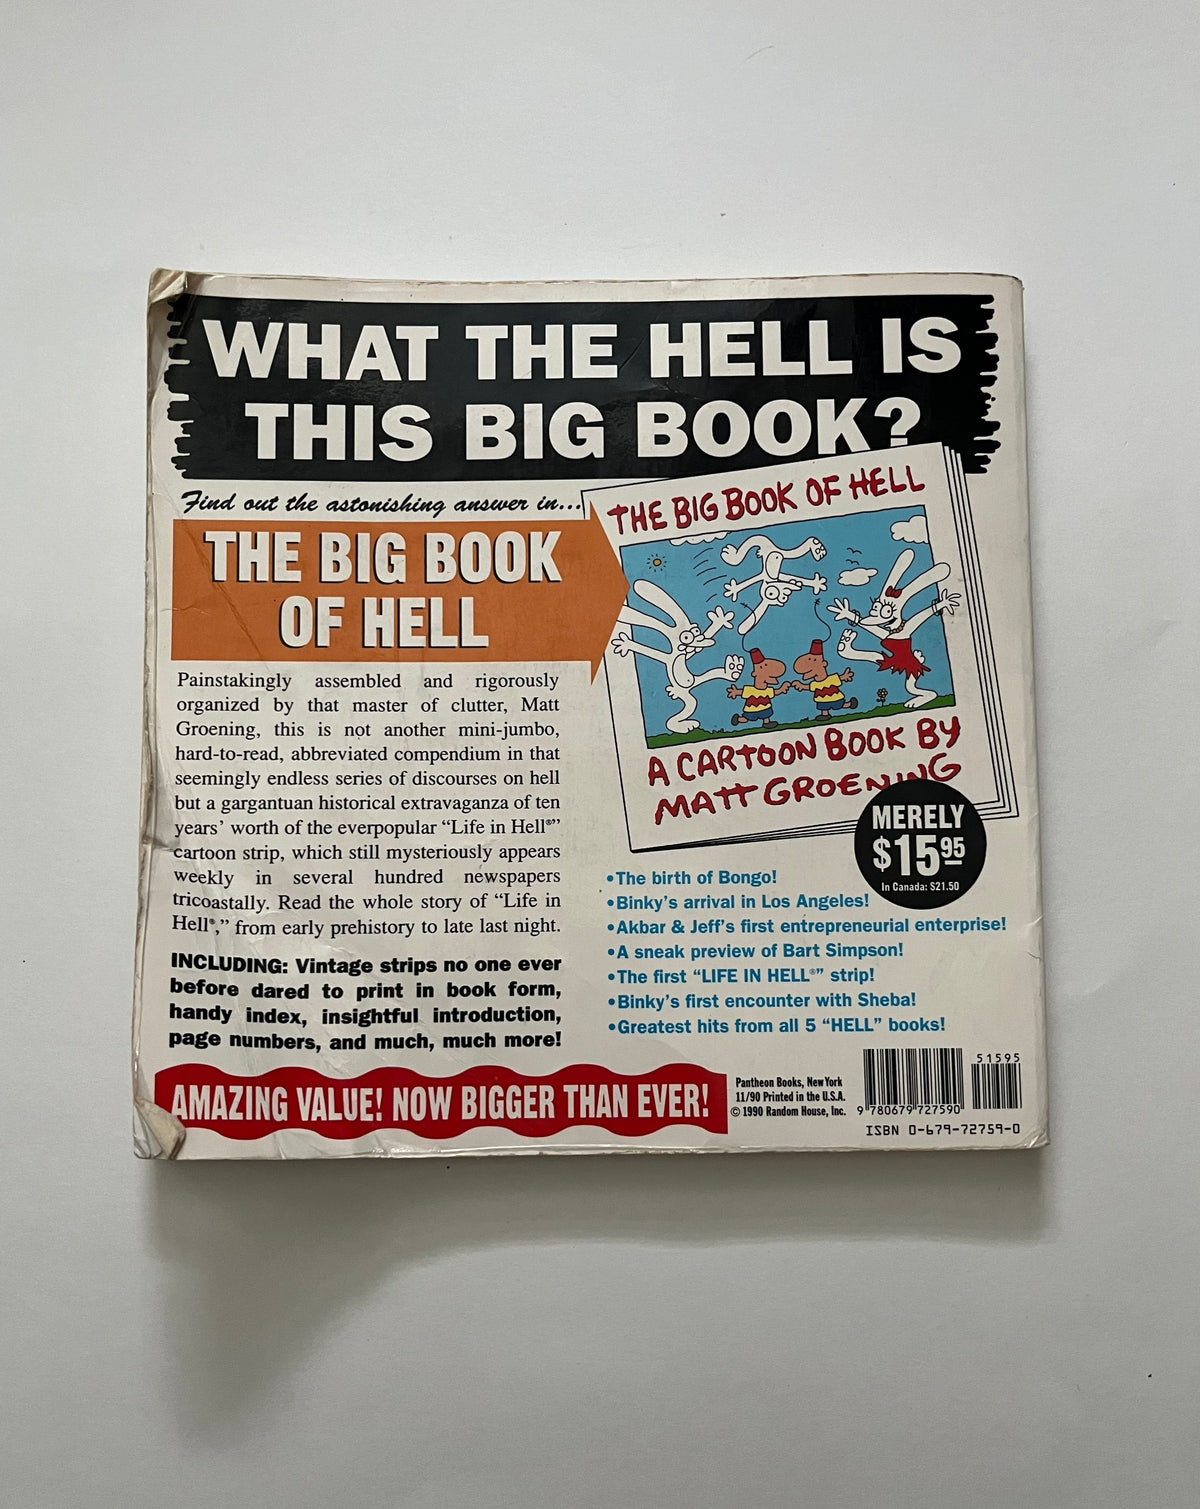 The Big Book of Hell by Matt Groening